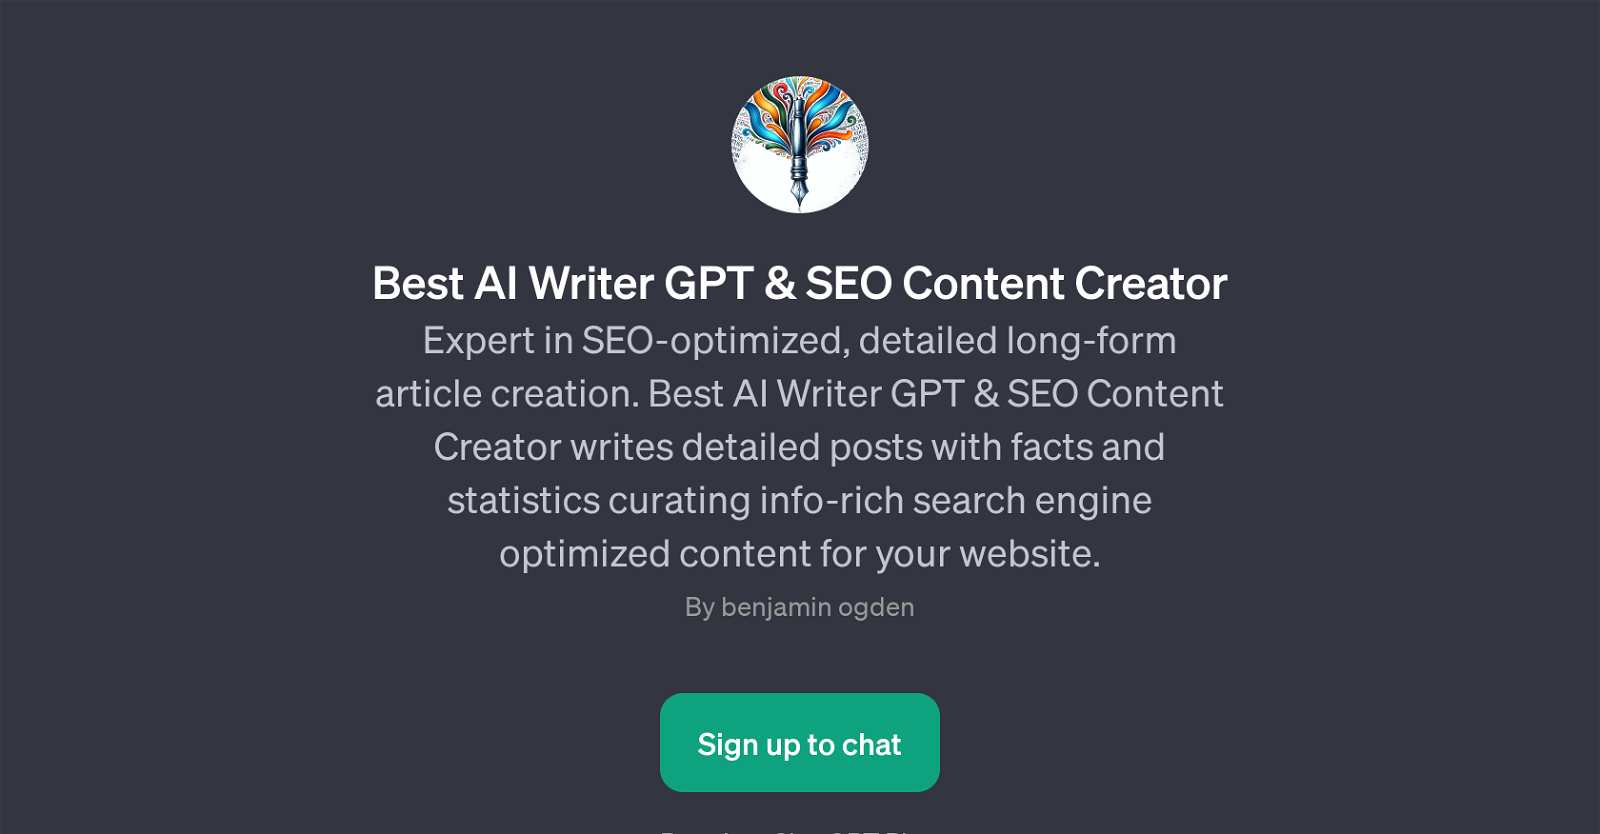 Best AI Writer GPT & SEO Content Creator website